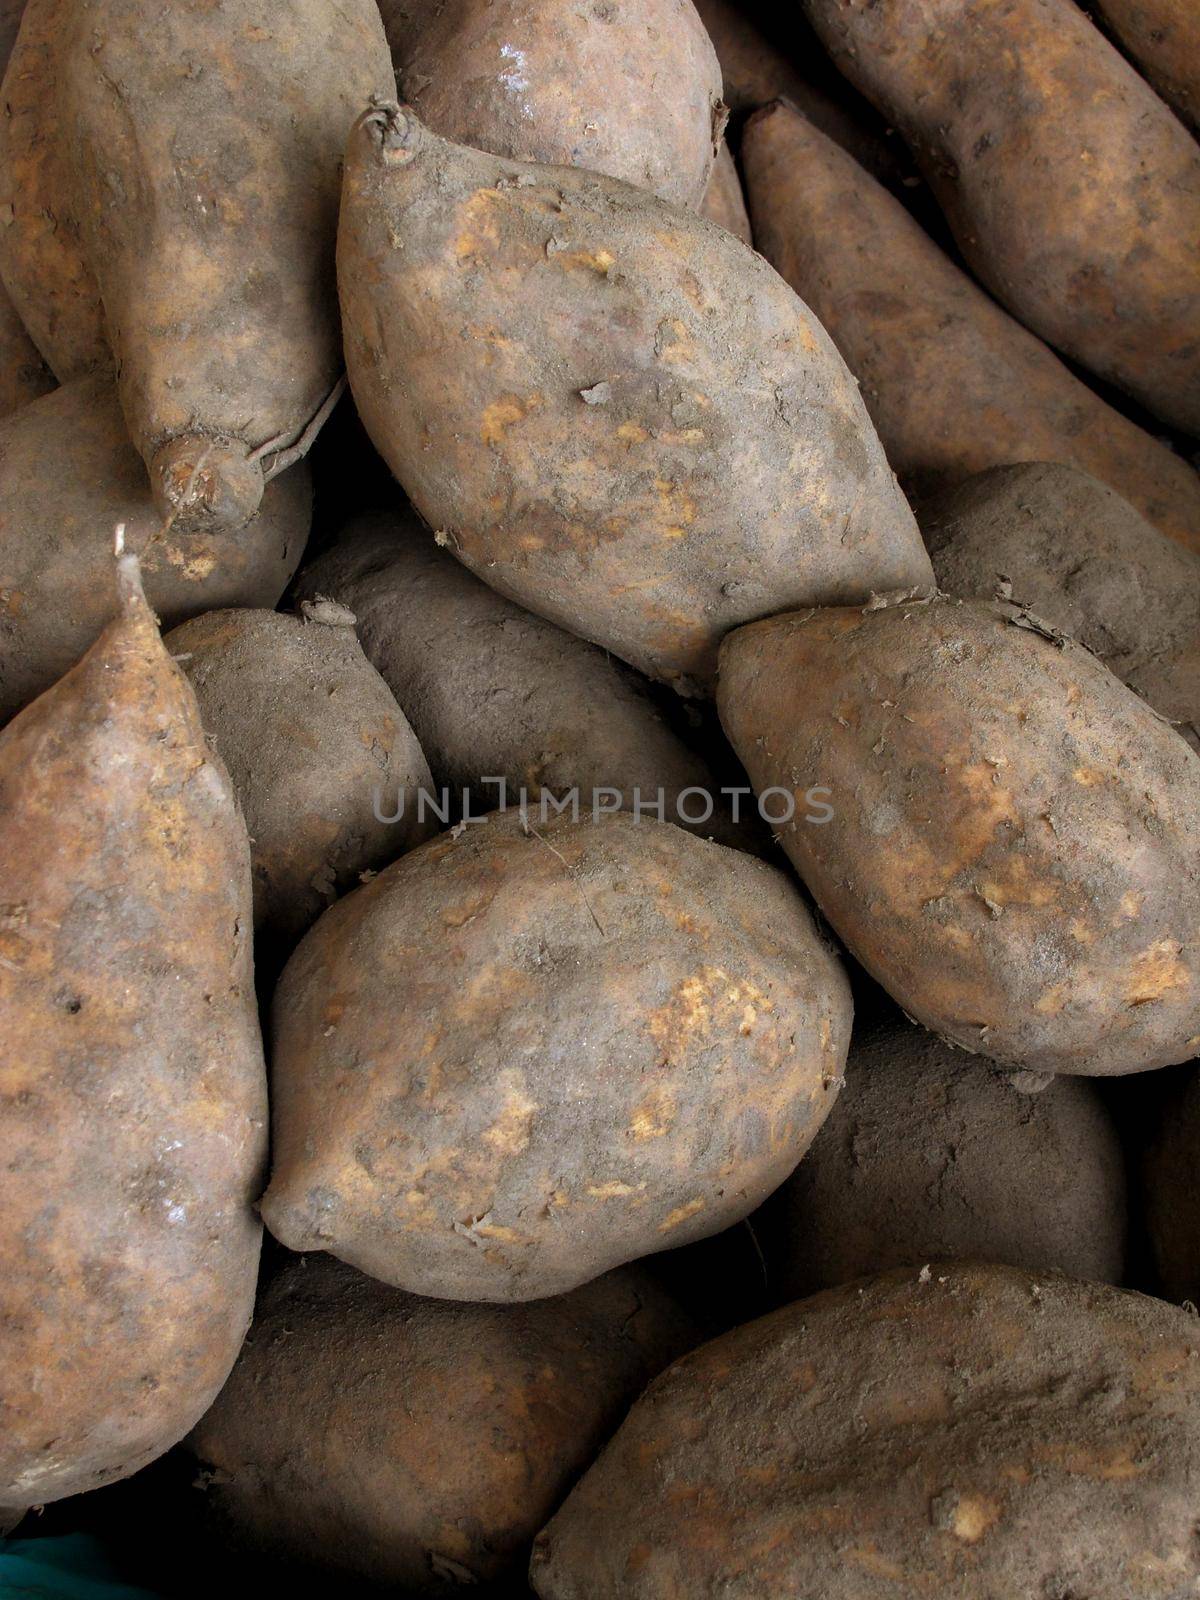 Sweet peruvian potato by aroas